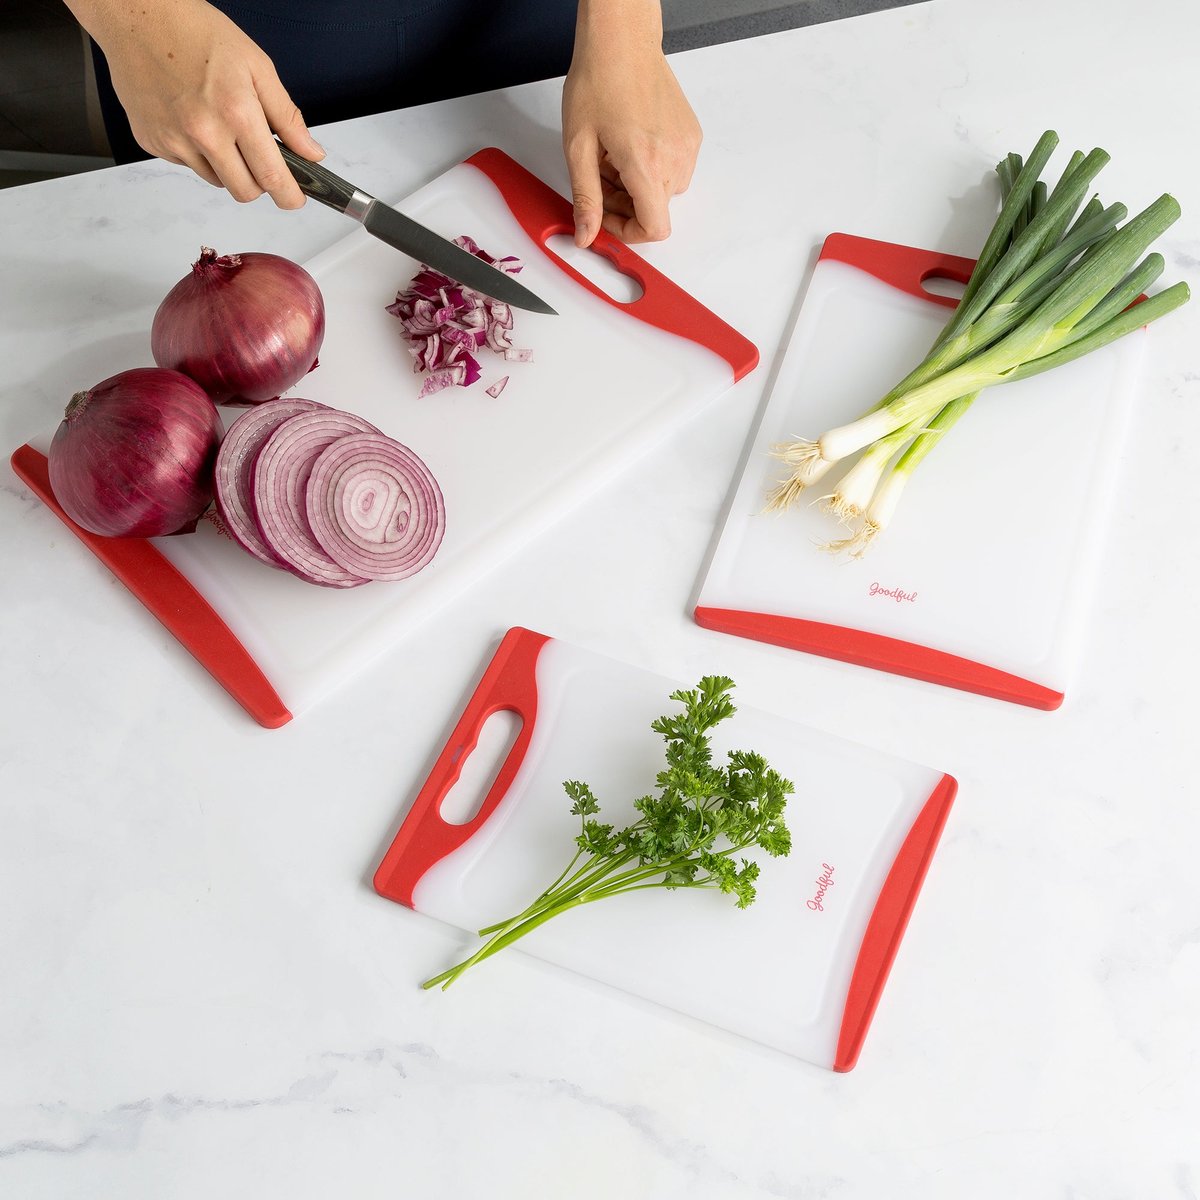 Goodful Kitchen Goodful Cutting Board (3 Piece Set)- Non-Slip Edges, Dishwasher  Safe, Multiple Sizes, Red